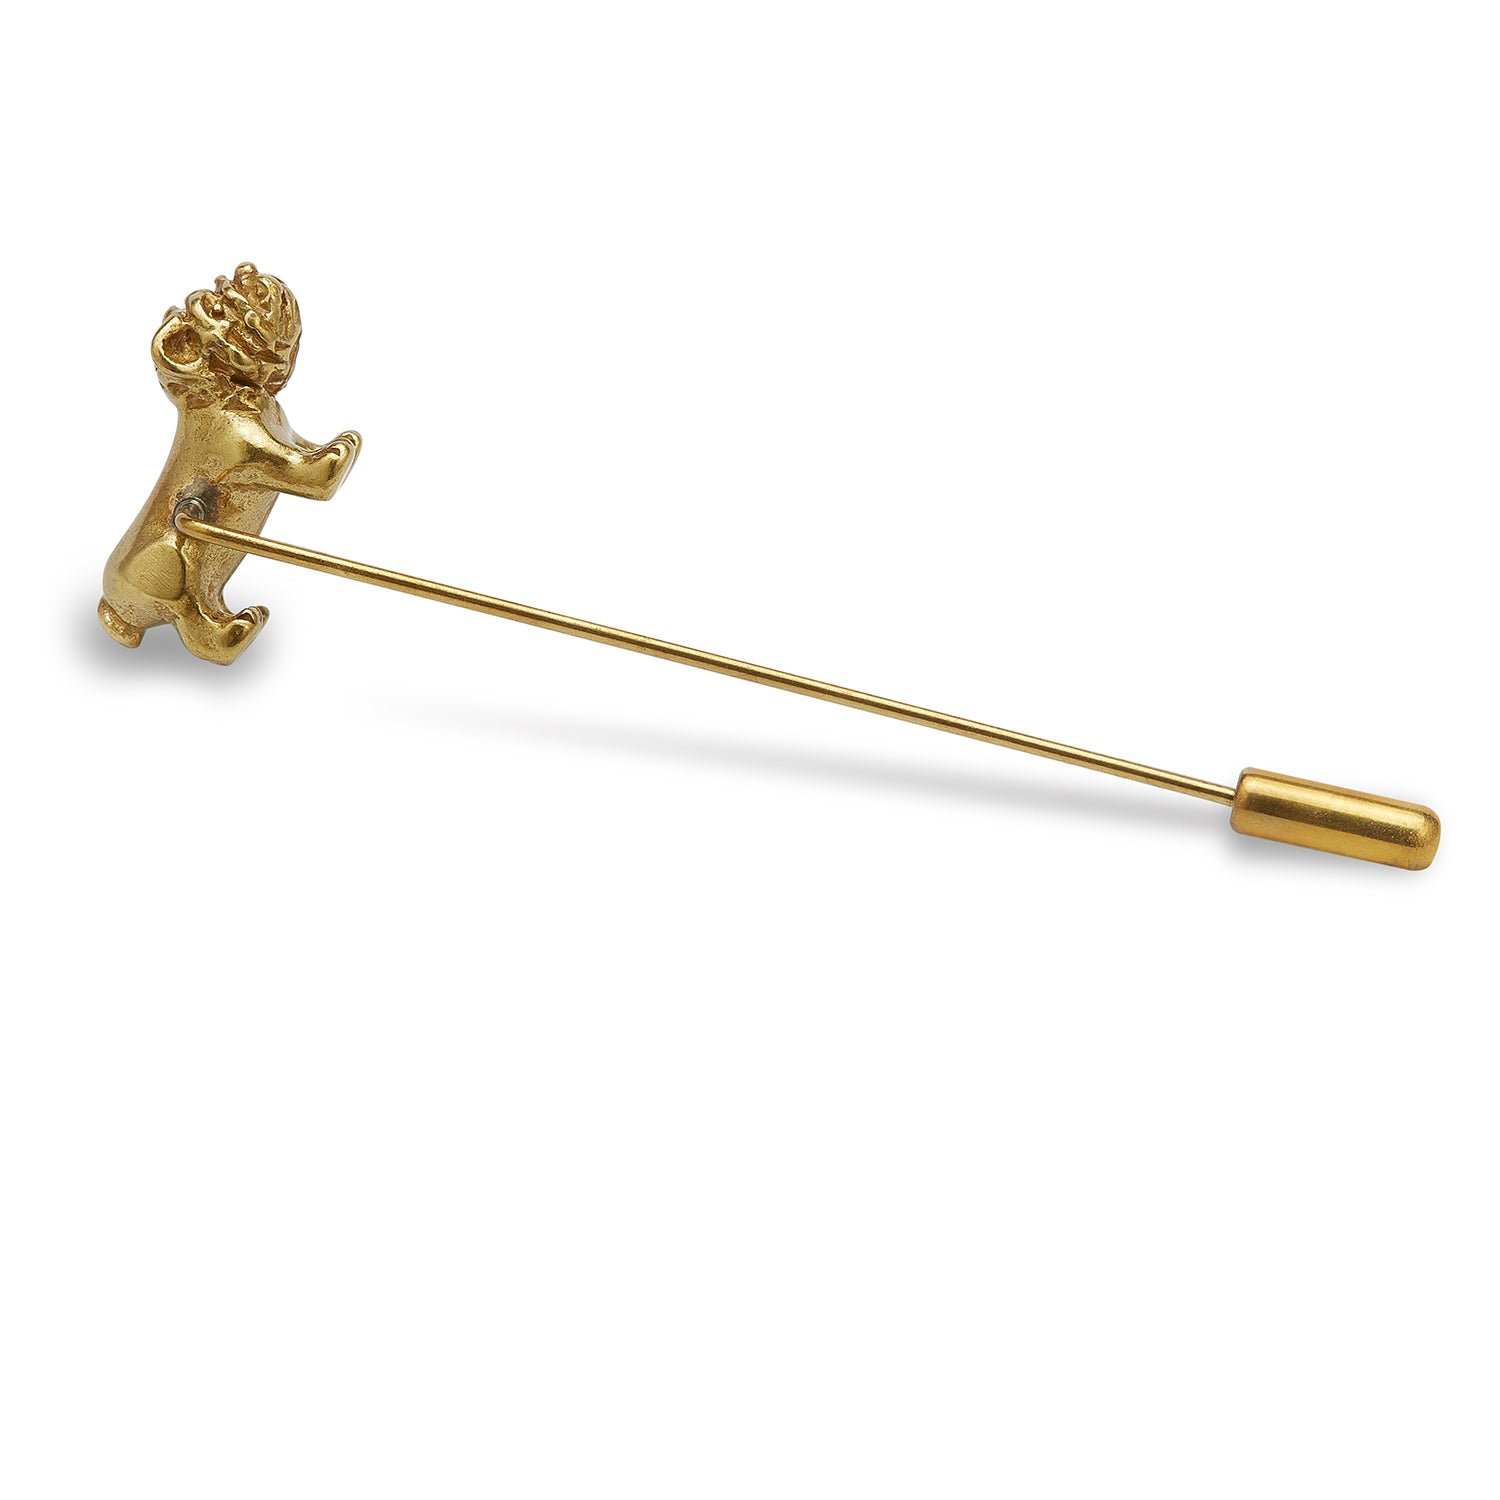 Antique Gold Pug Lapel Pins